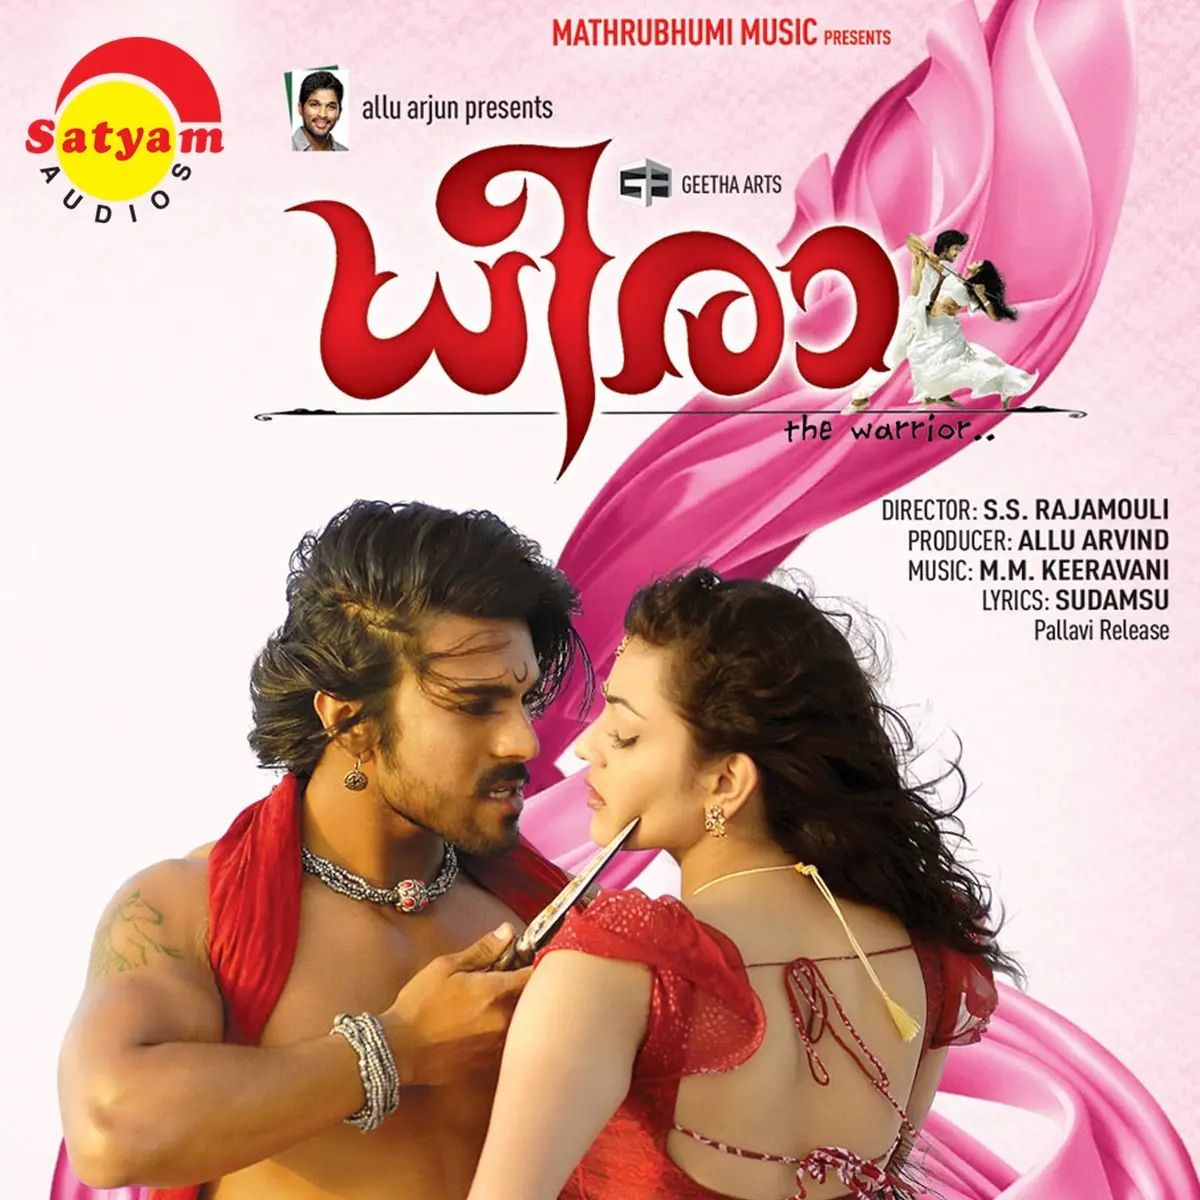 Malayalam Puran Video - Dheera Malayalam Songs Free Download Mp3 71 Gas Do Daske 3 Ceo ...